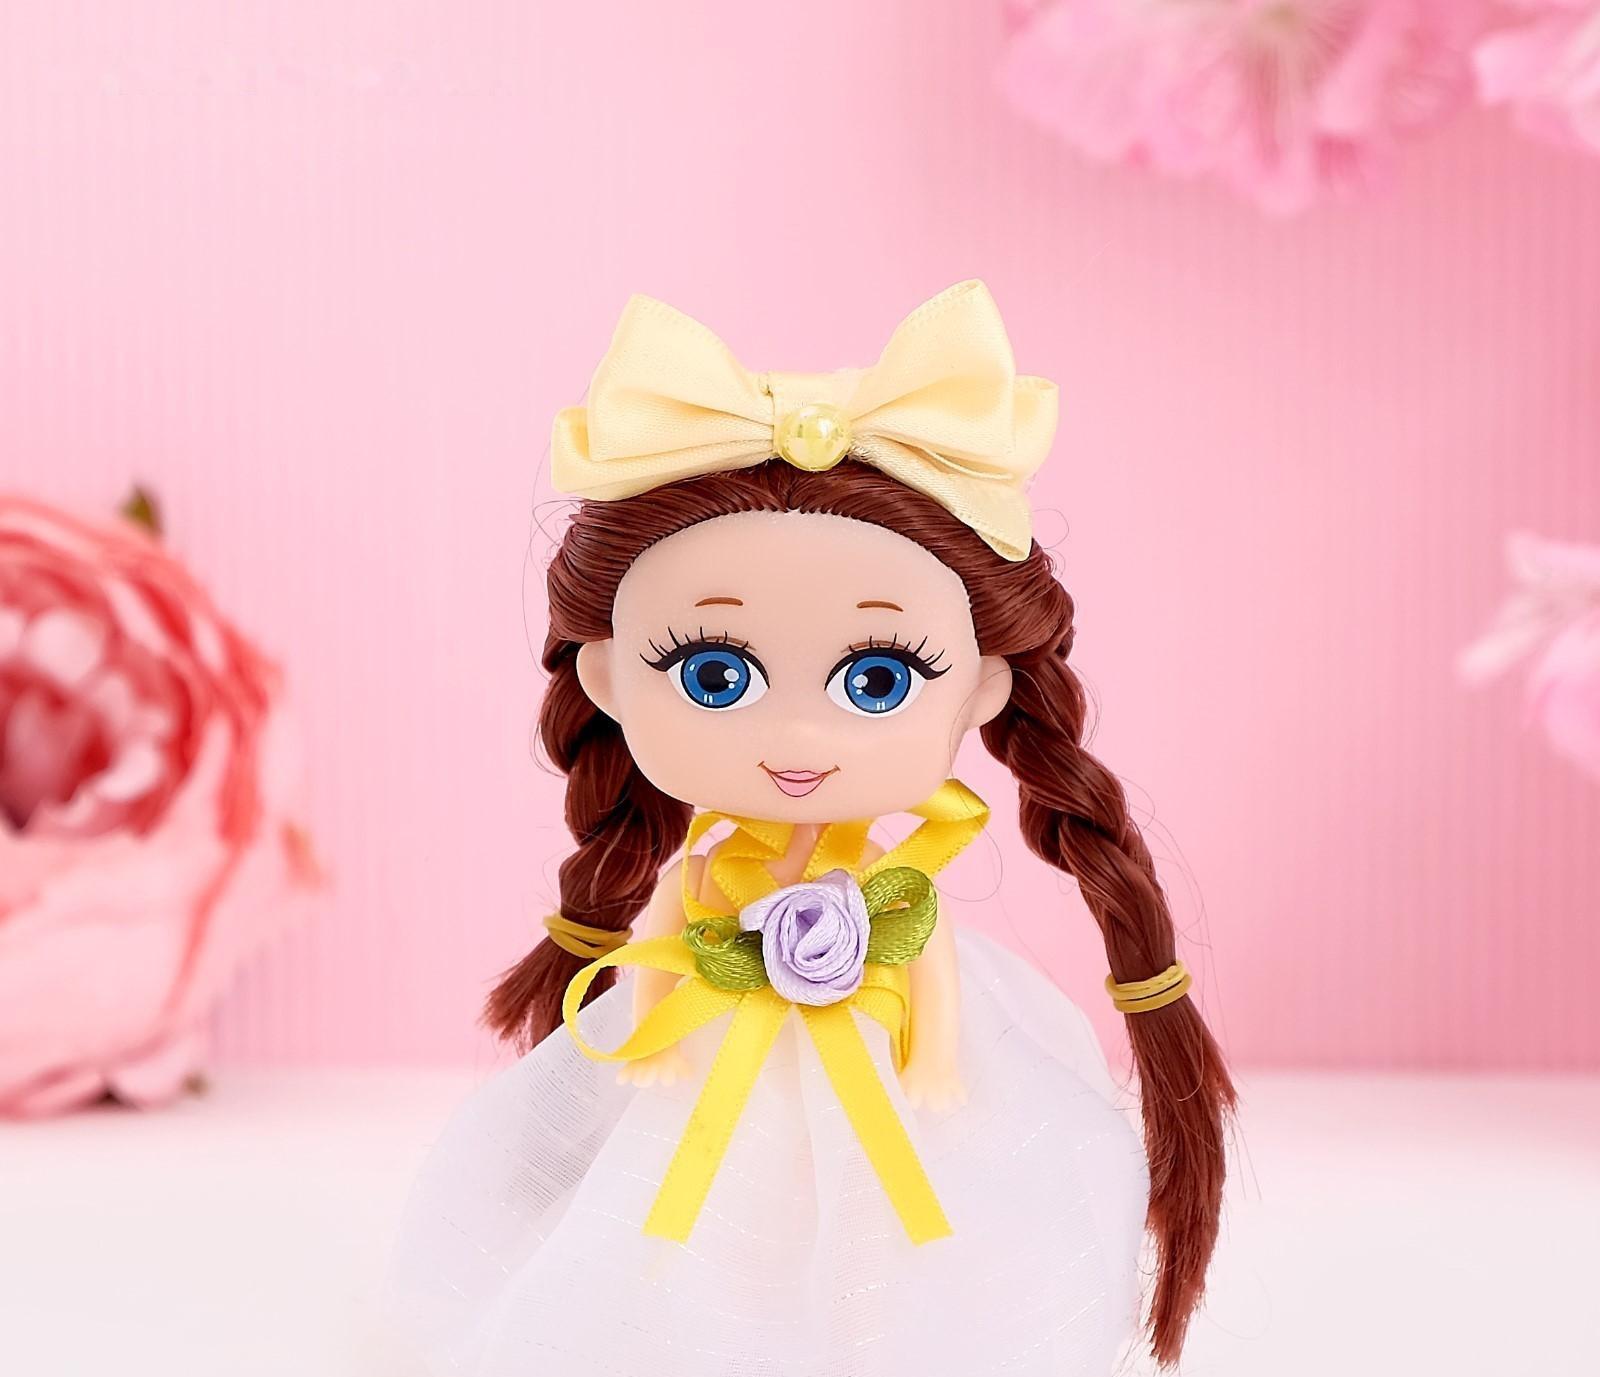 Кукла малышка «Прекрасной принцессе» , МИКС